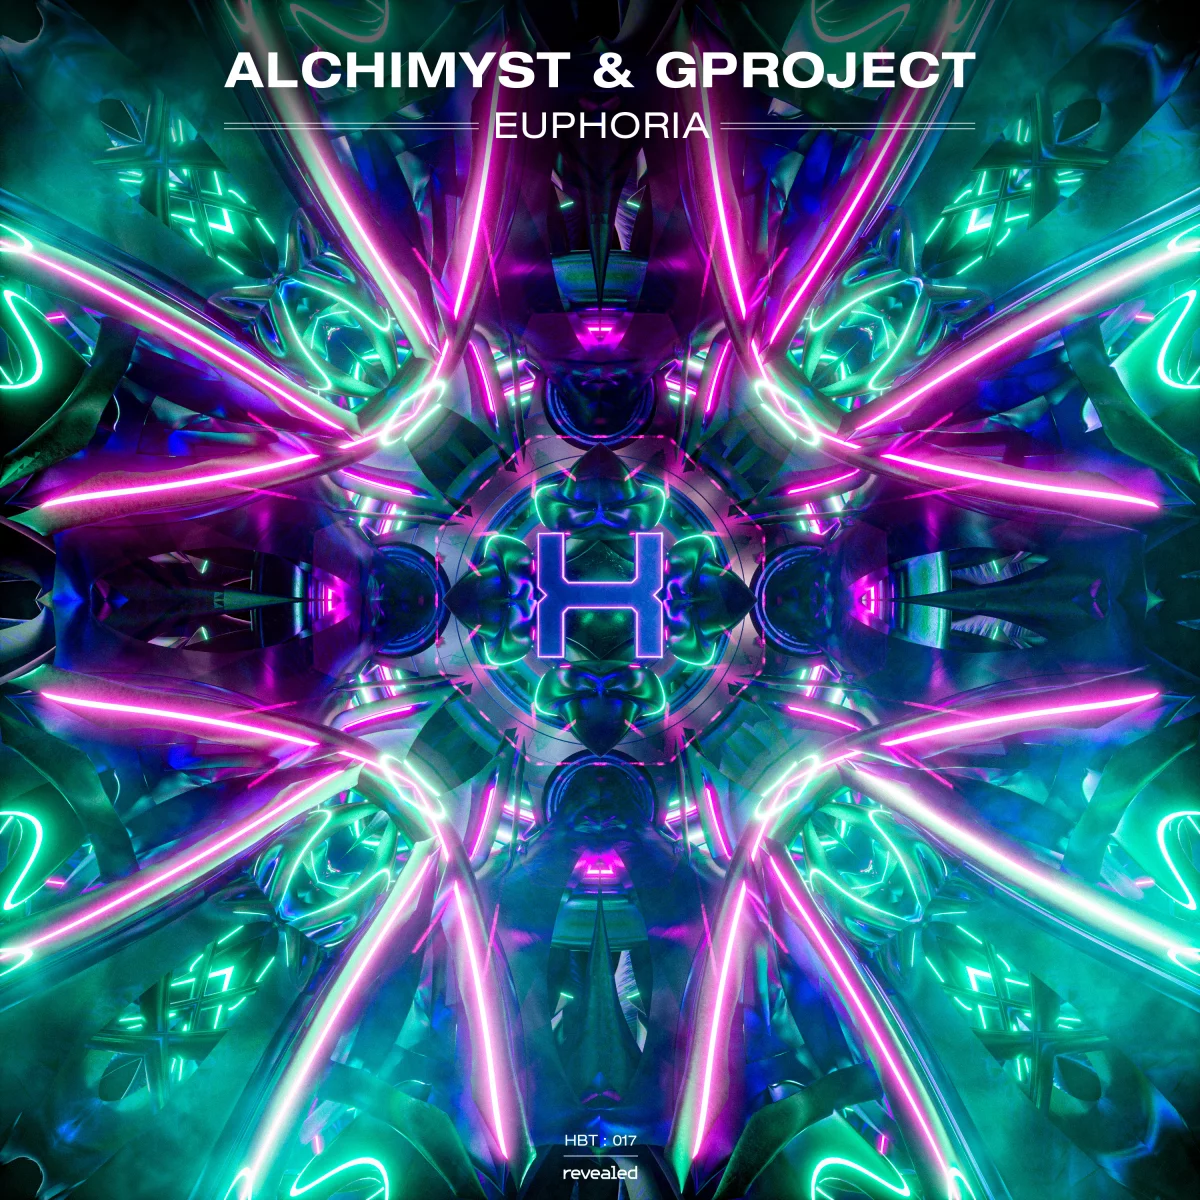 Euphoria - Alchimyst⁠, Gproject⁠ & HYBIT⁠